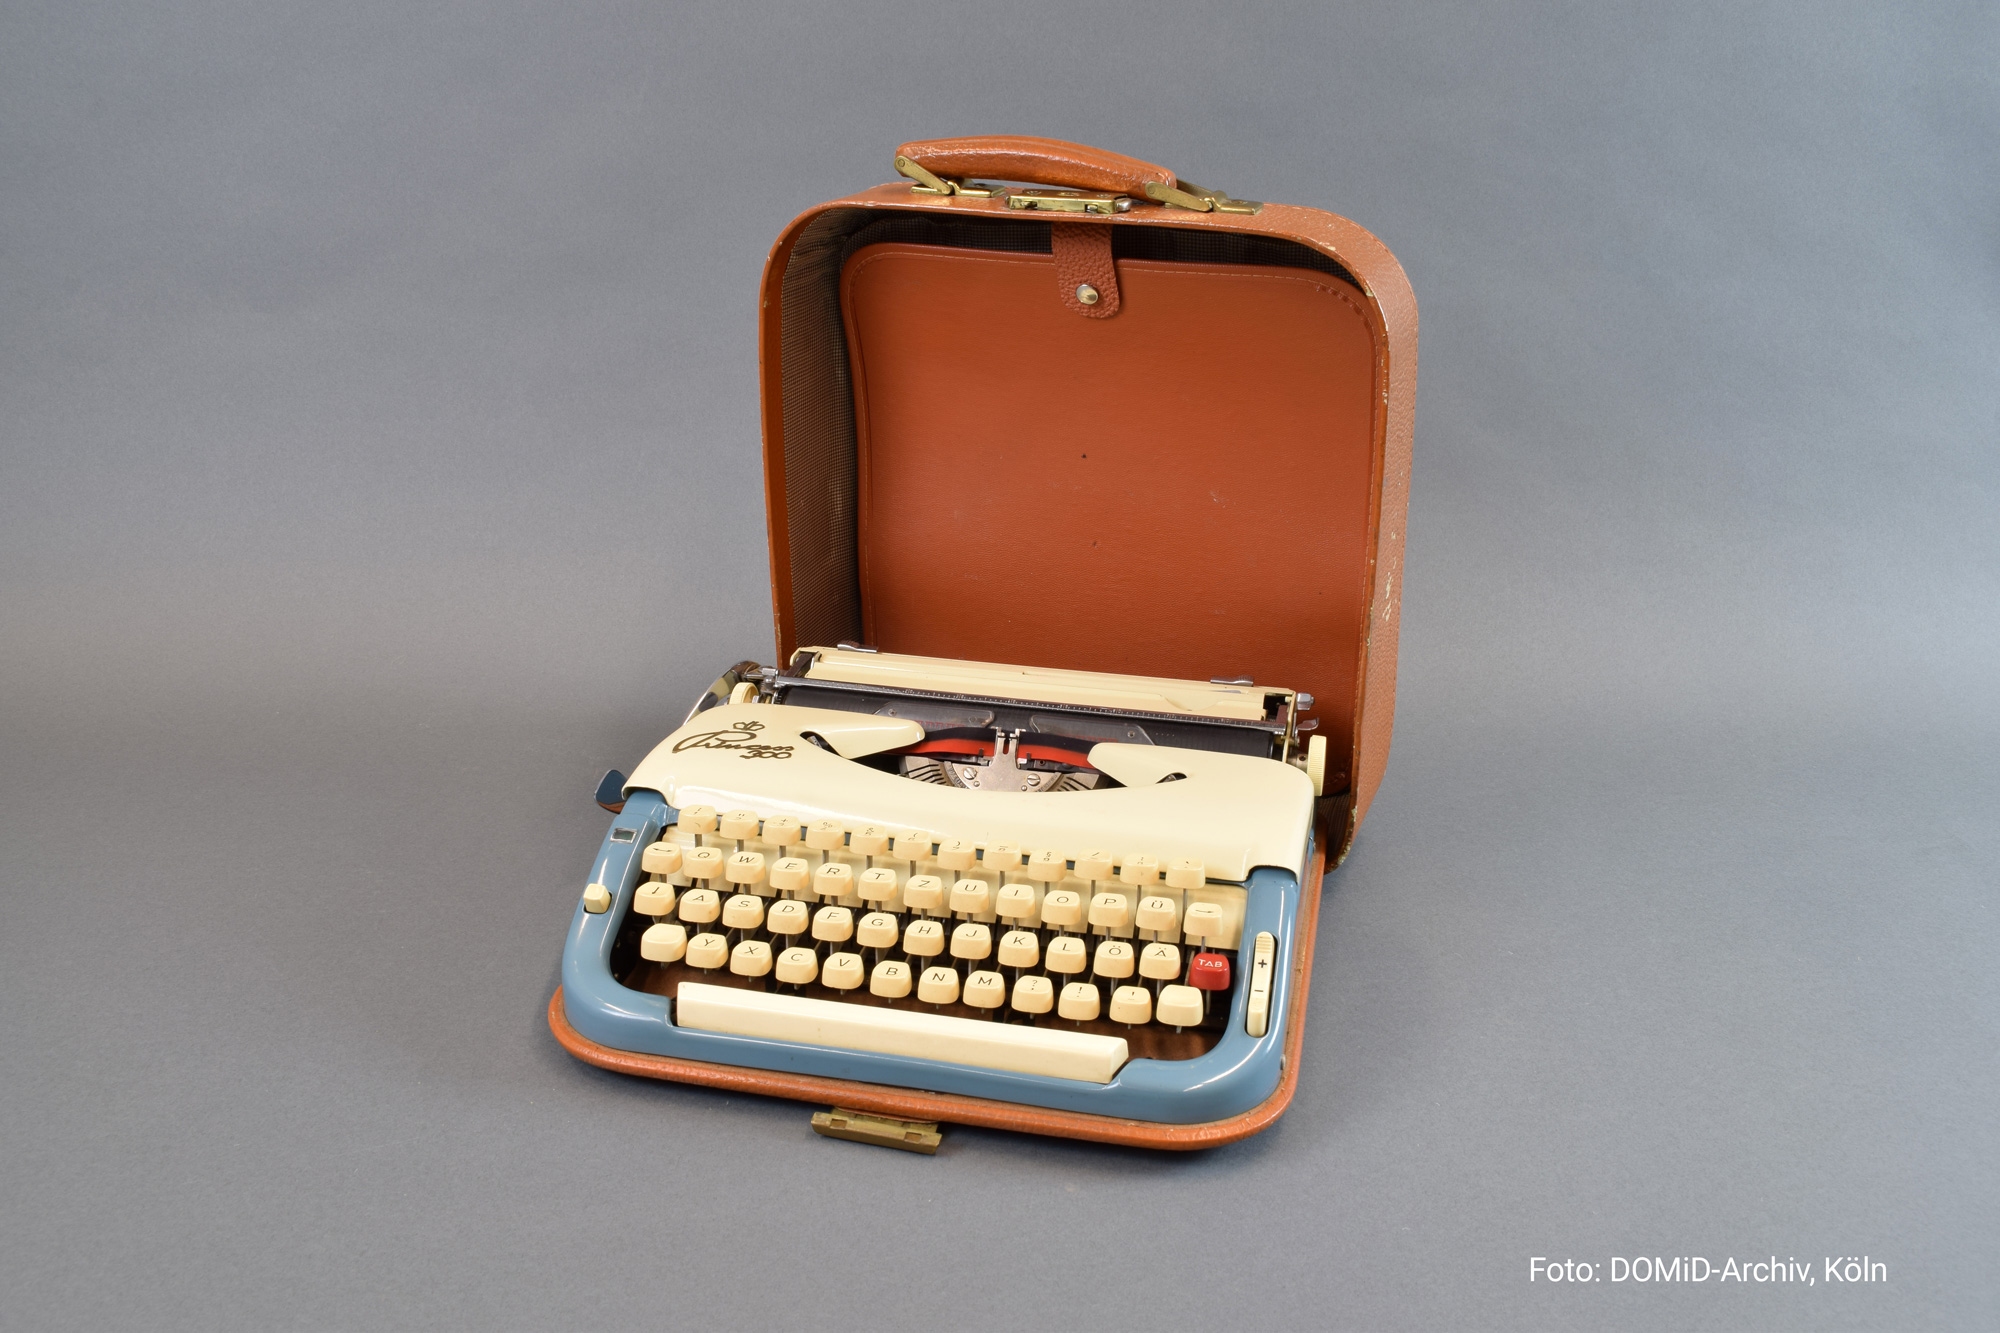 Theodor Wonja Michael's travel typewriter from the 1960s © DOMiD-Archiv, Köln